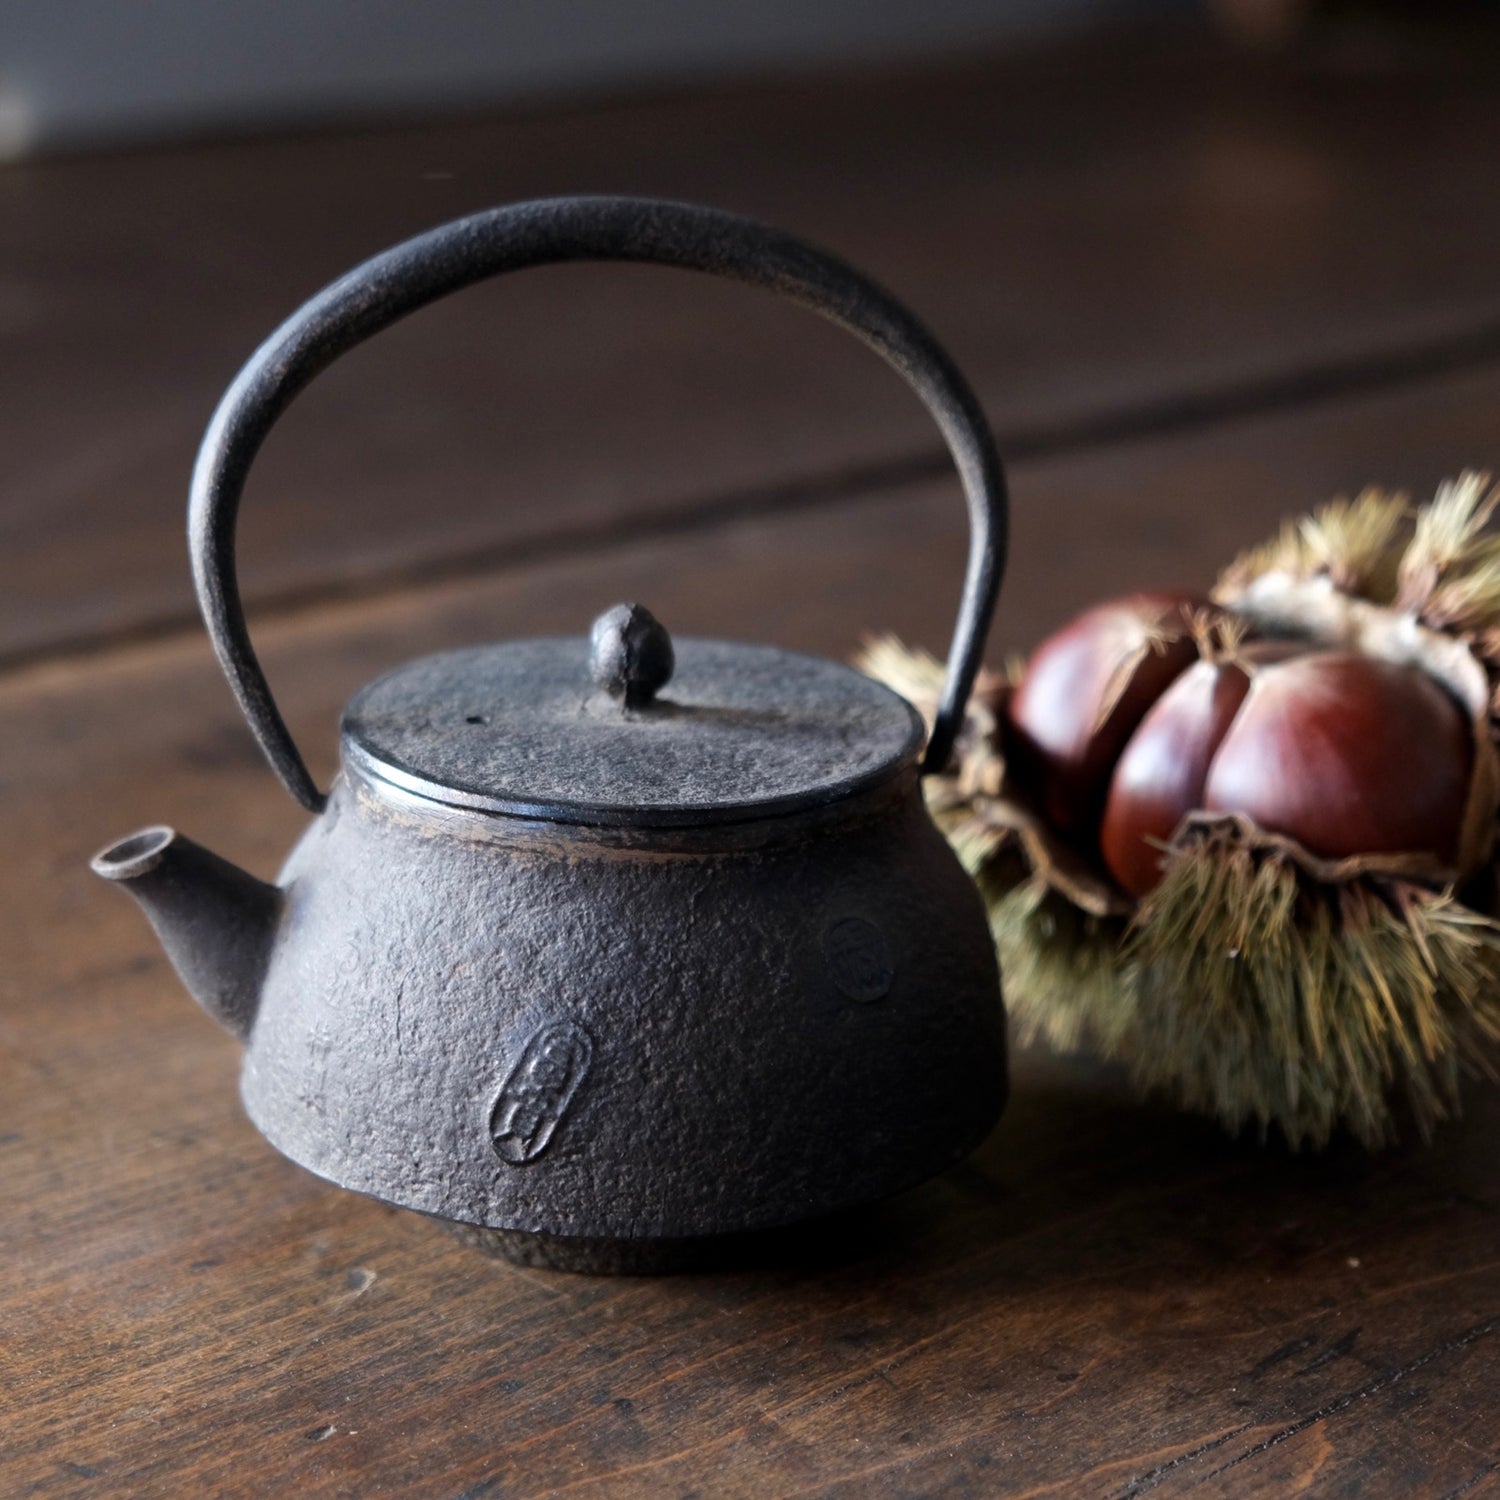 Vintage Japanese Tetsubin iron kettle small size (kotobuki